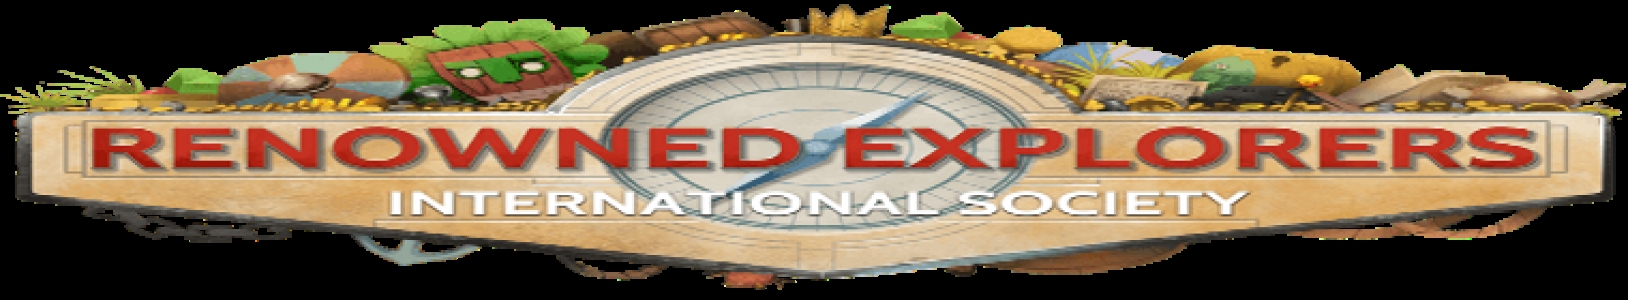 Renowned Explorers: International Society banner